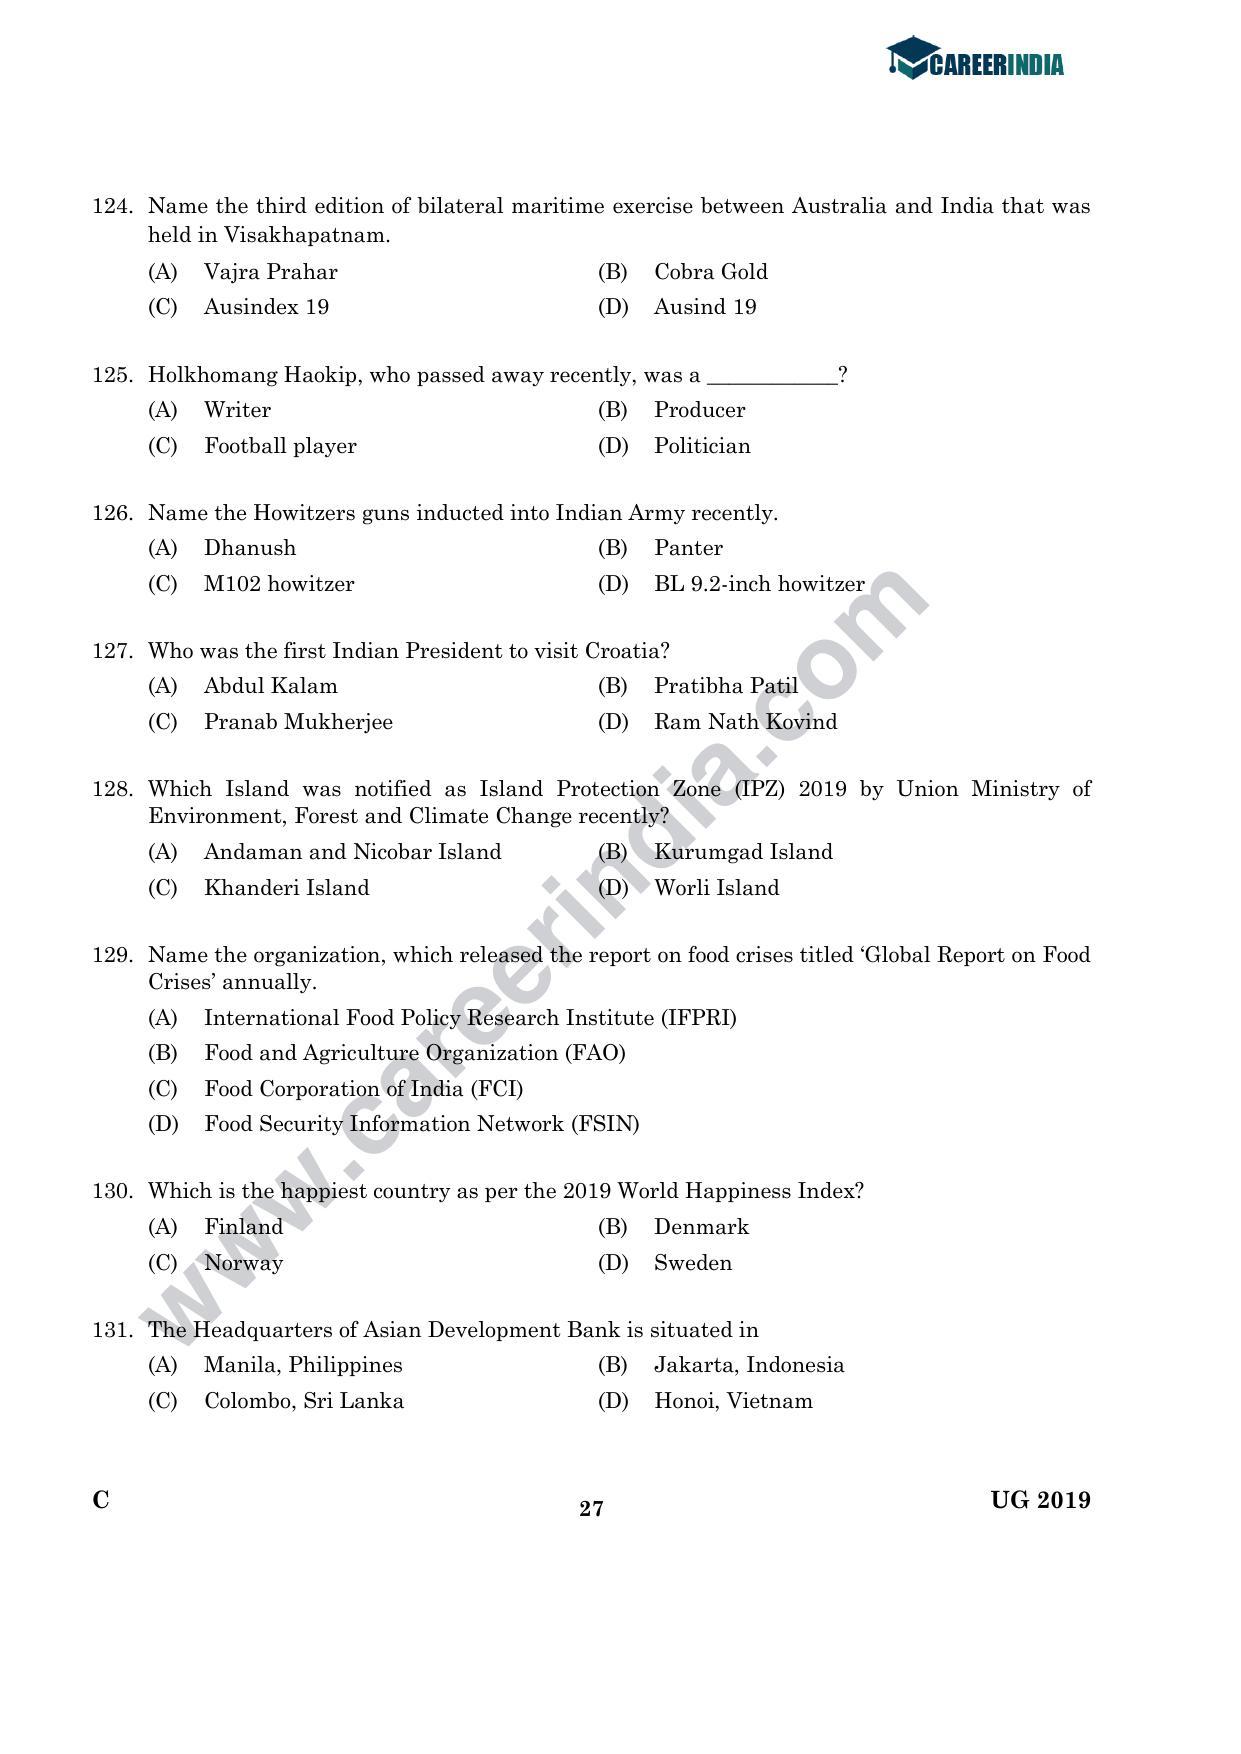 CLAT 2019 UG Legal-Aptitude Question Paper - Page 26